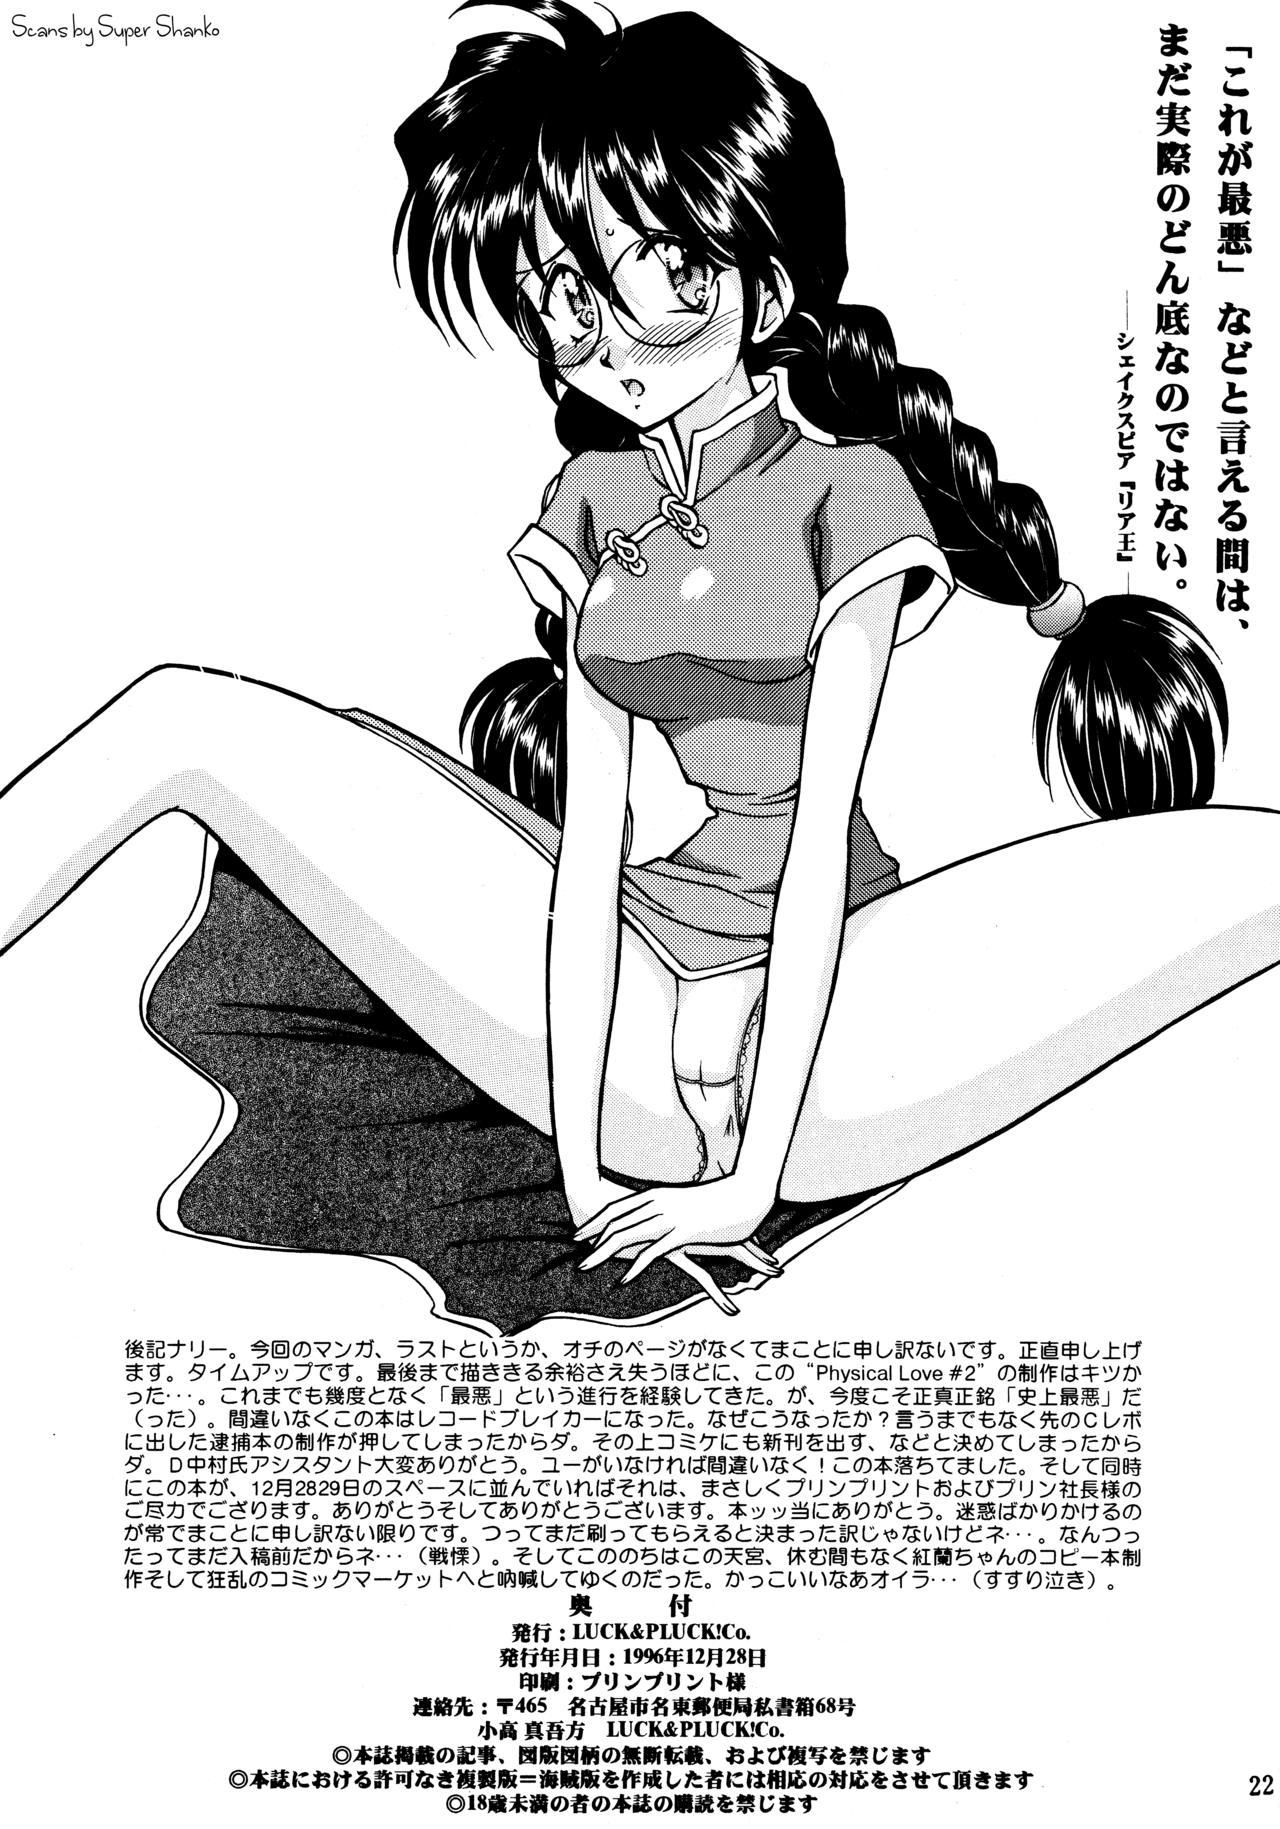 Behind Physical Love #2 - Sakura taisen Urine - Page 21